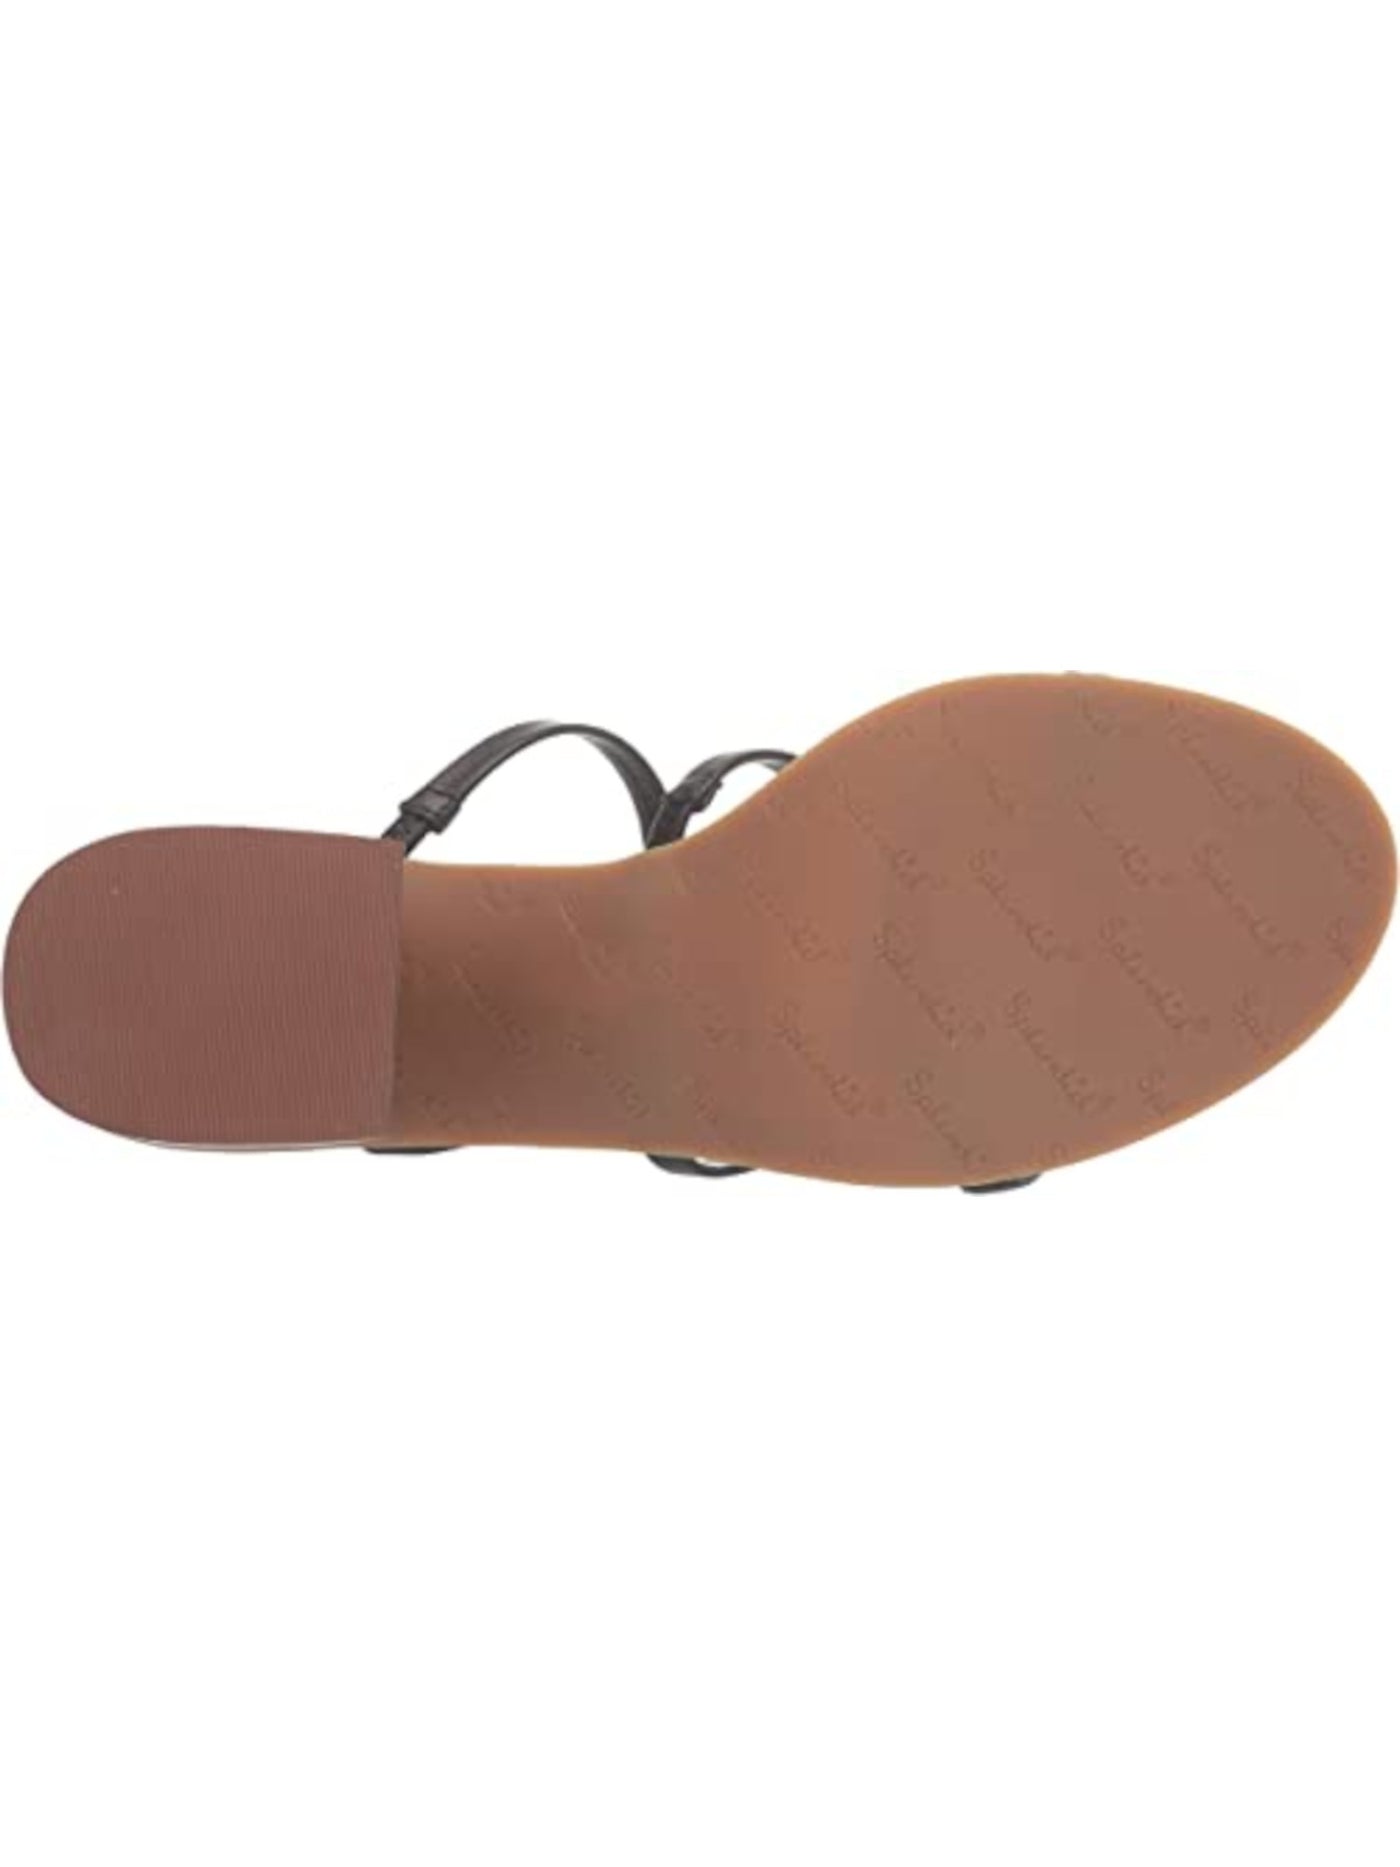 SPLENDID Womens Black Strappy Padded Meli Round Toe Block Heel Slip On Leather Dress Sandals Shoes M